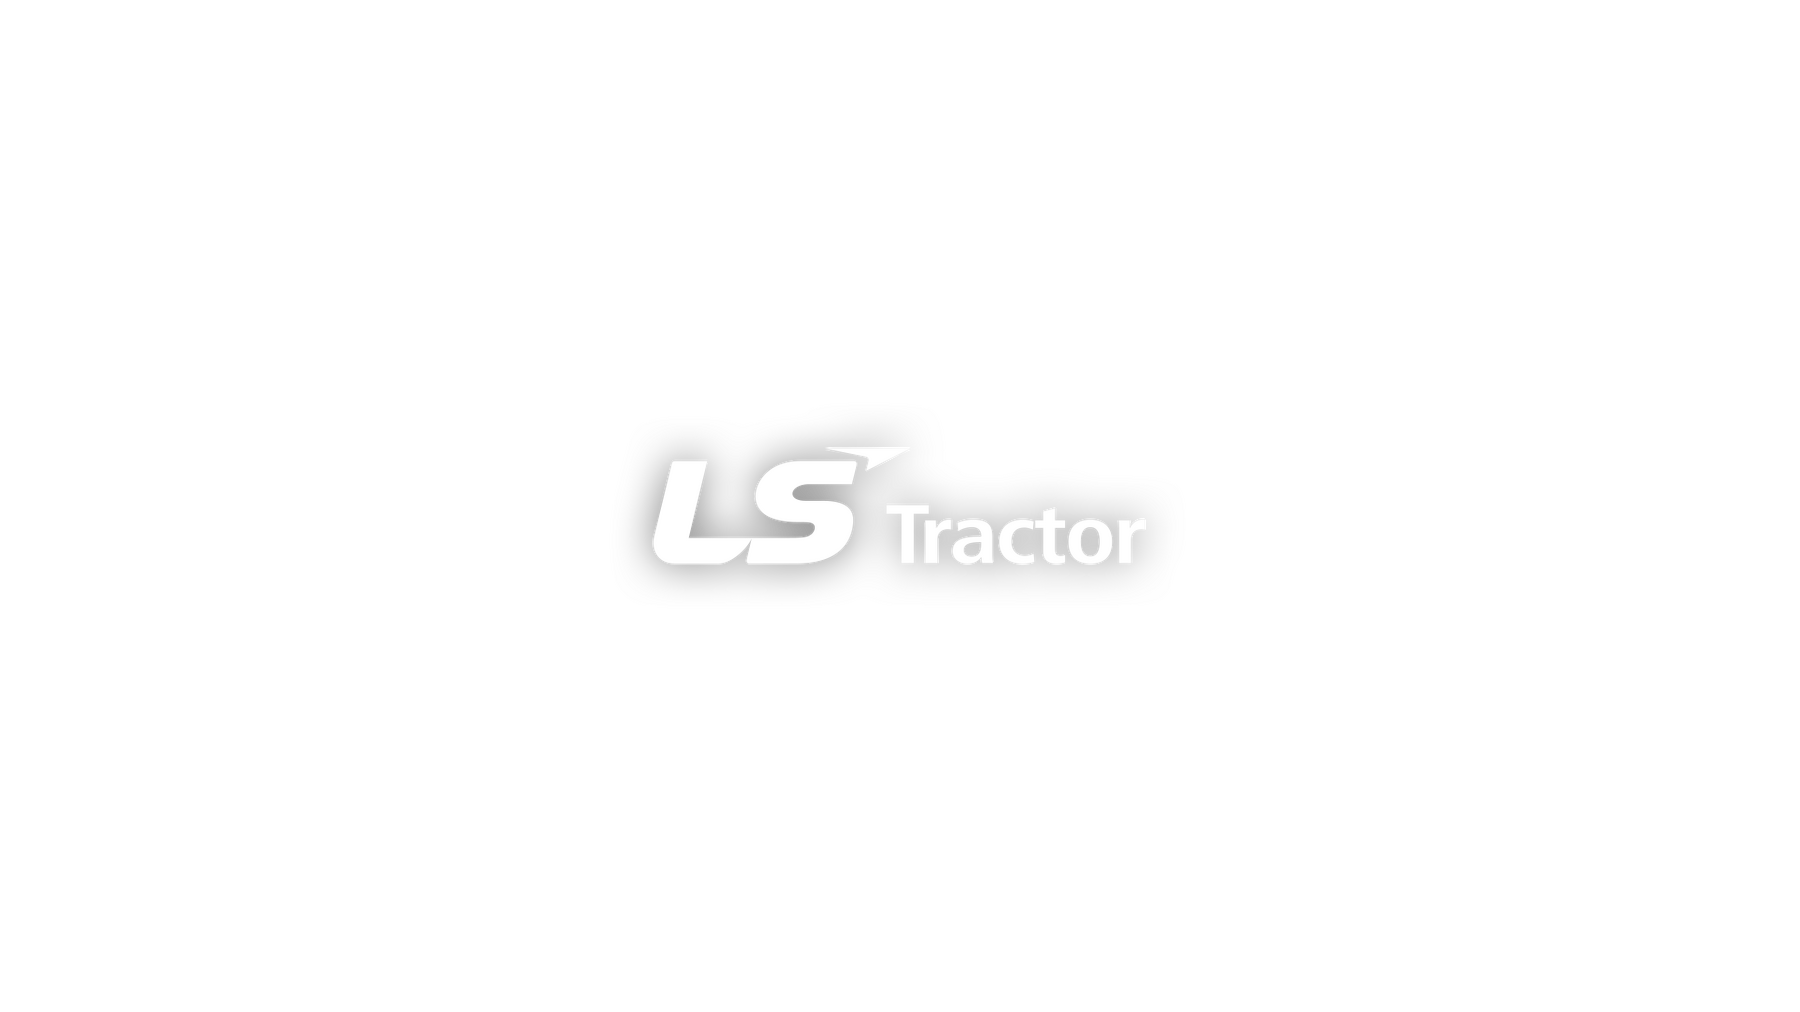 Ls tractor logo center